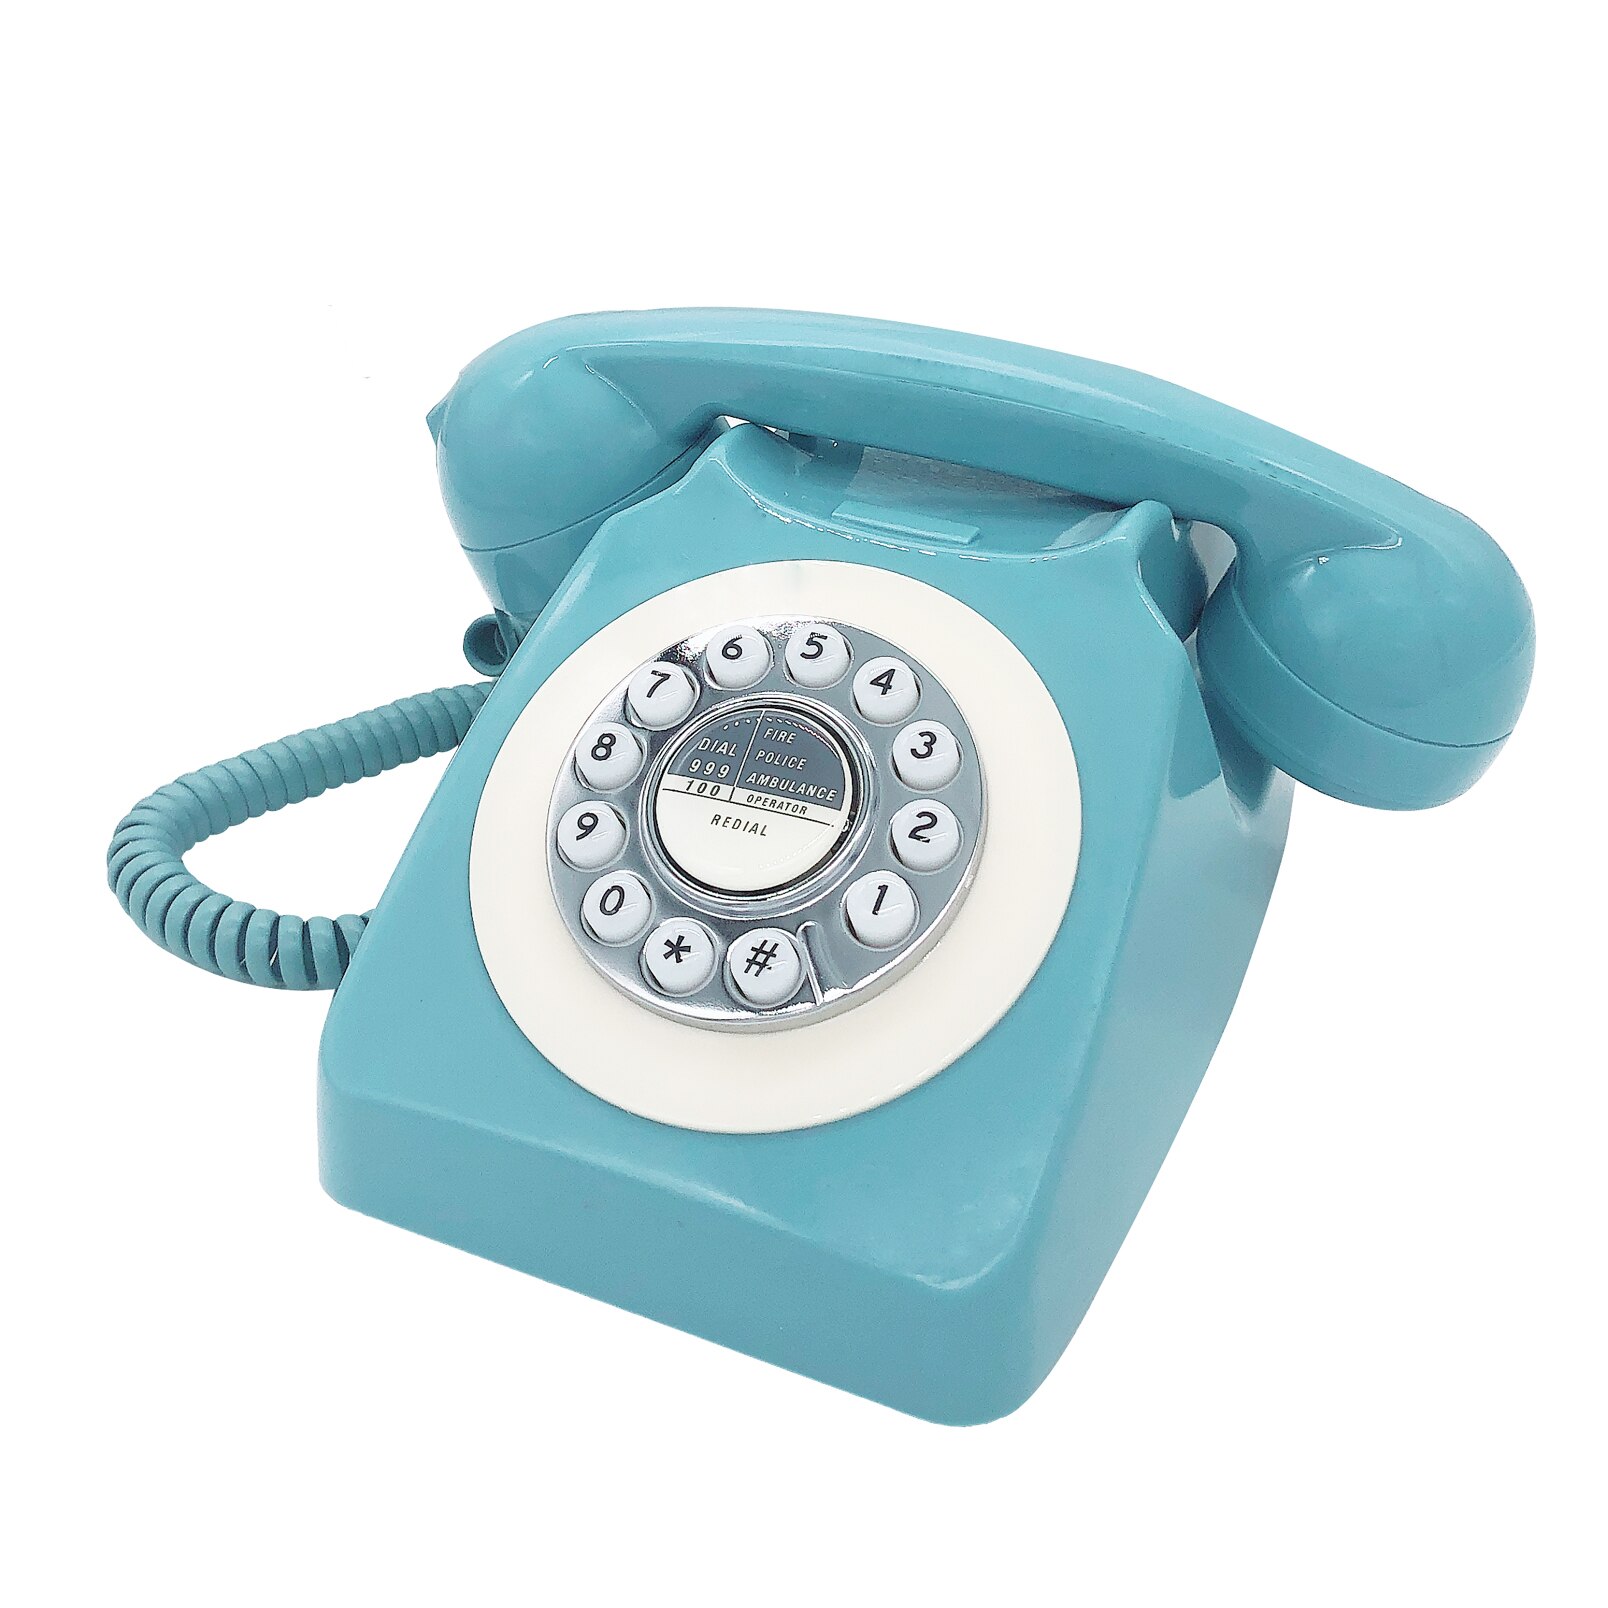 Blue Retro Telephone Corded Pretty Antique Telephone Old Fashion Landline Phones of 1960s Best European Style Telephone Gift